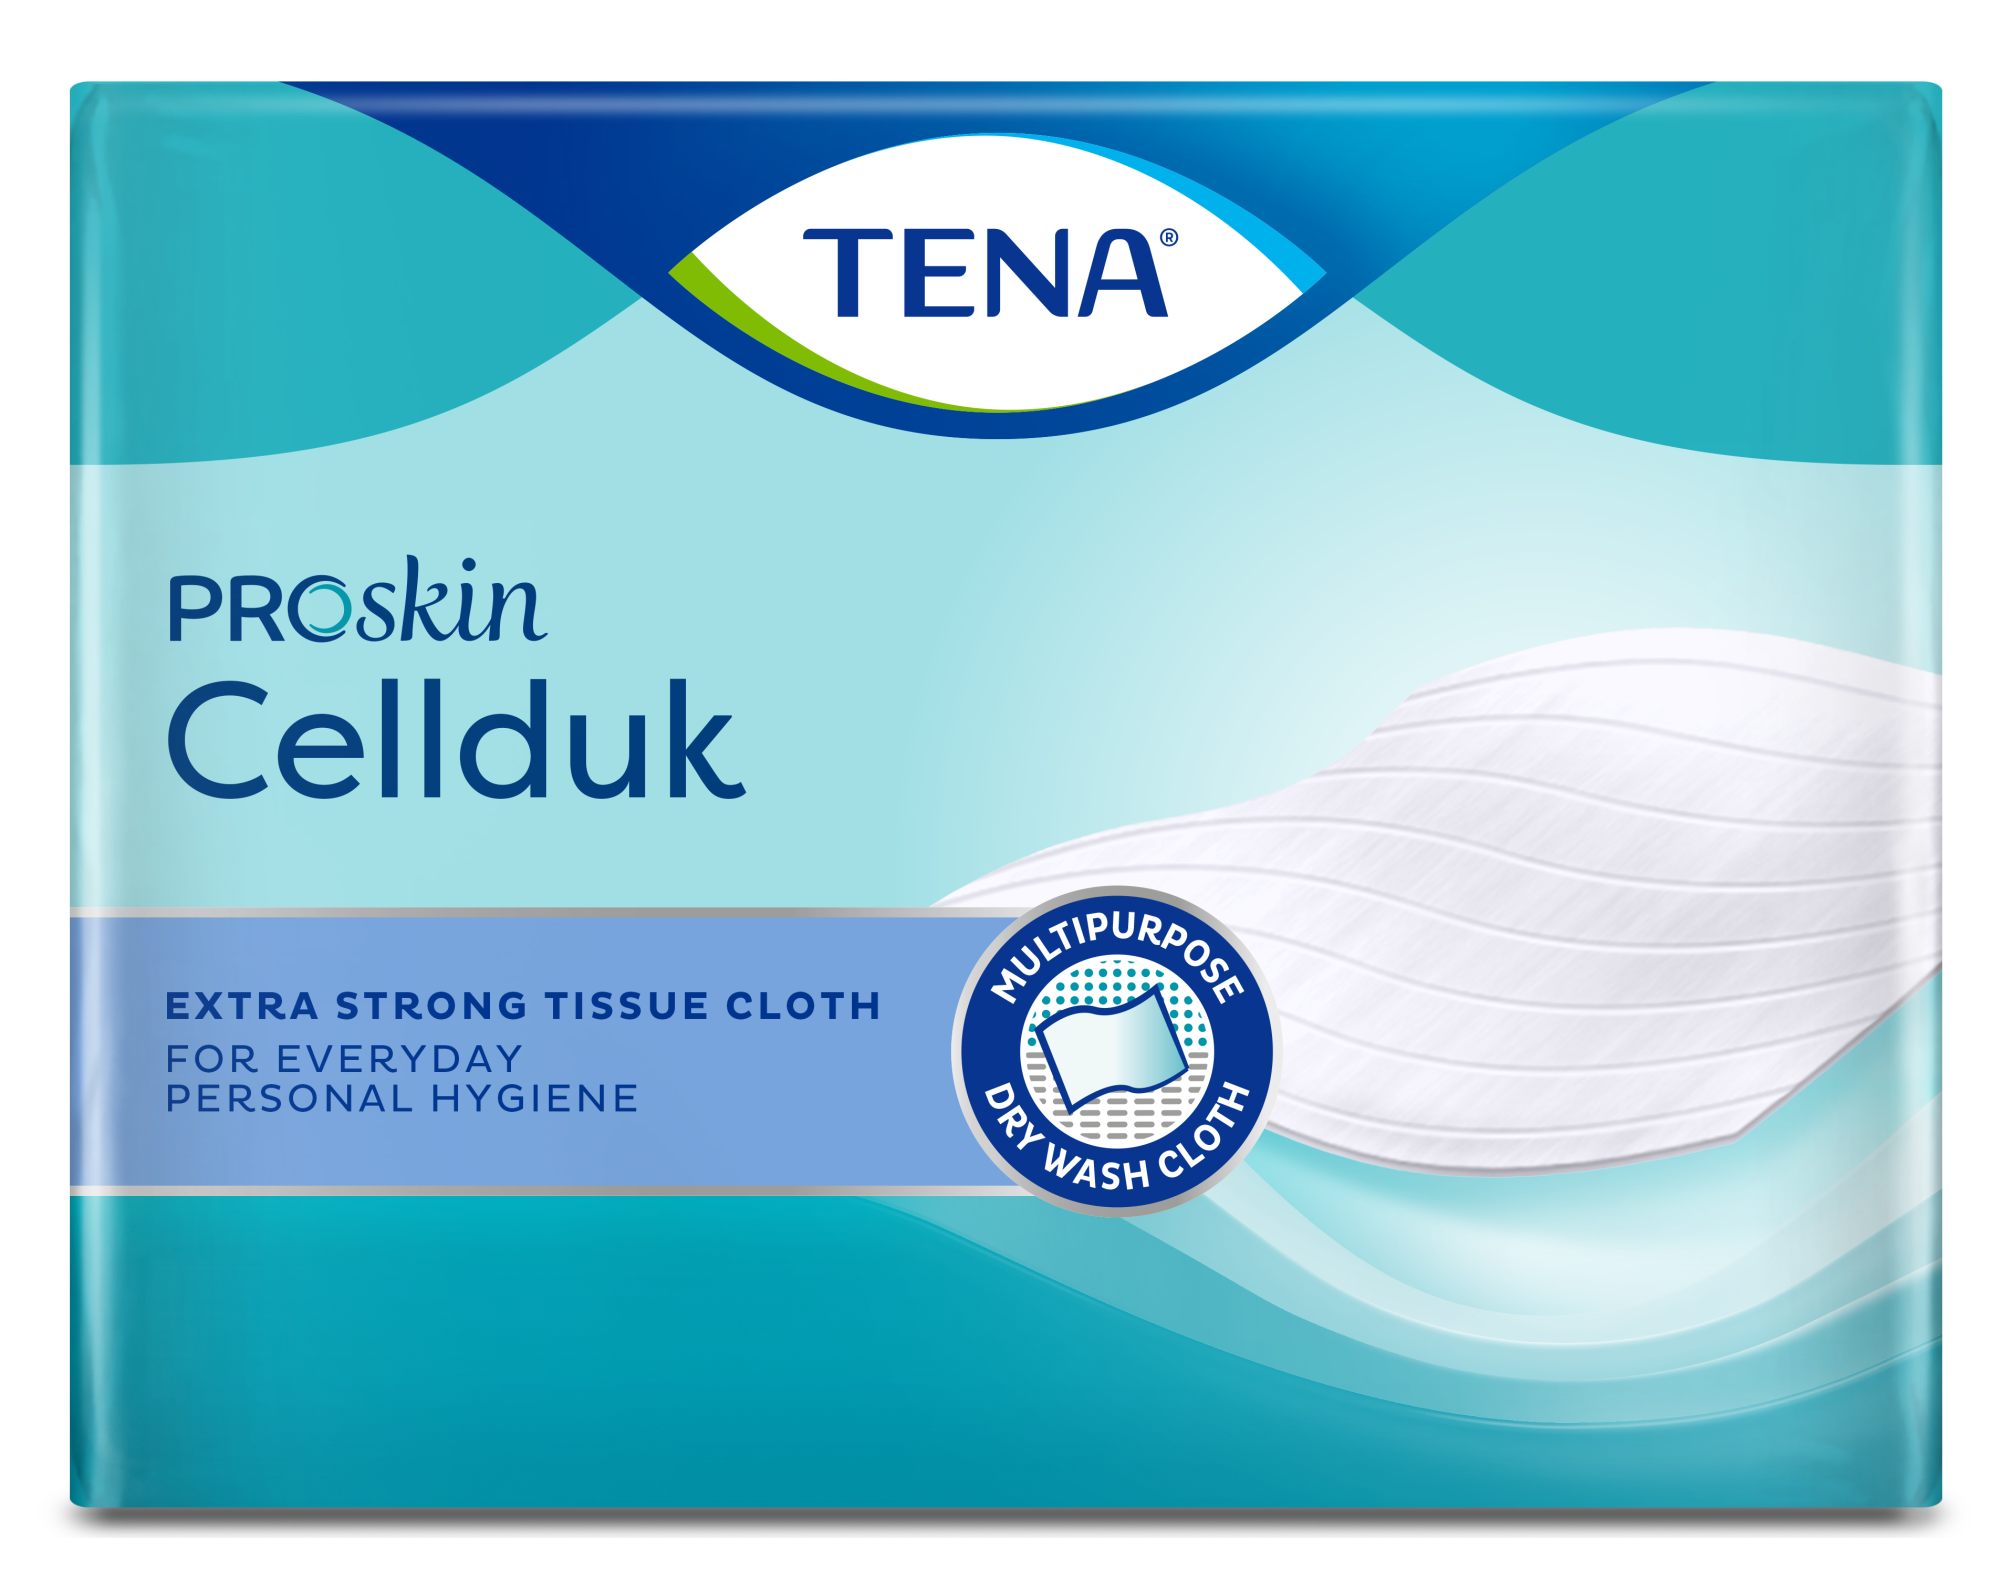 TENA ProSkin Cellduk | Pesulaput